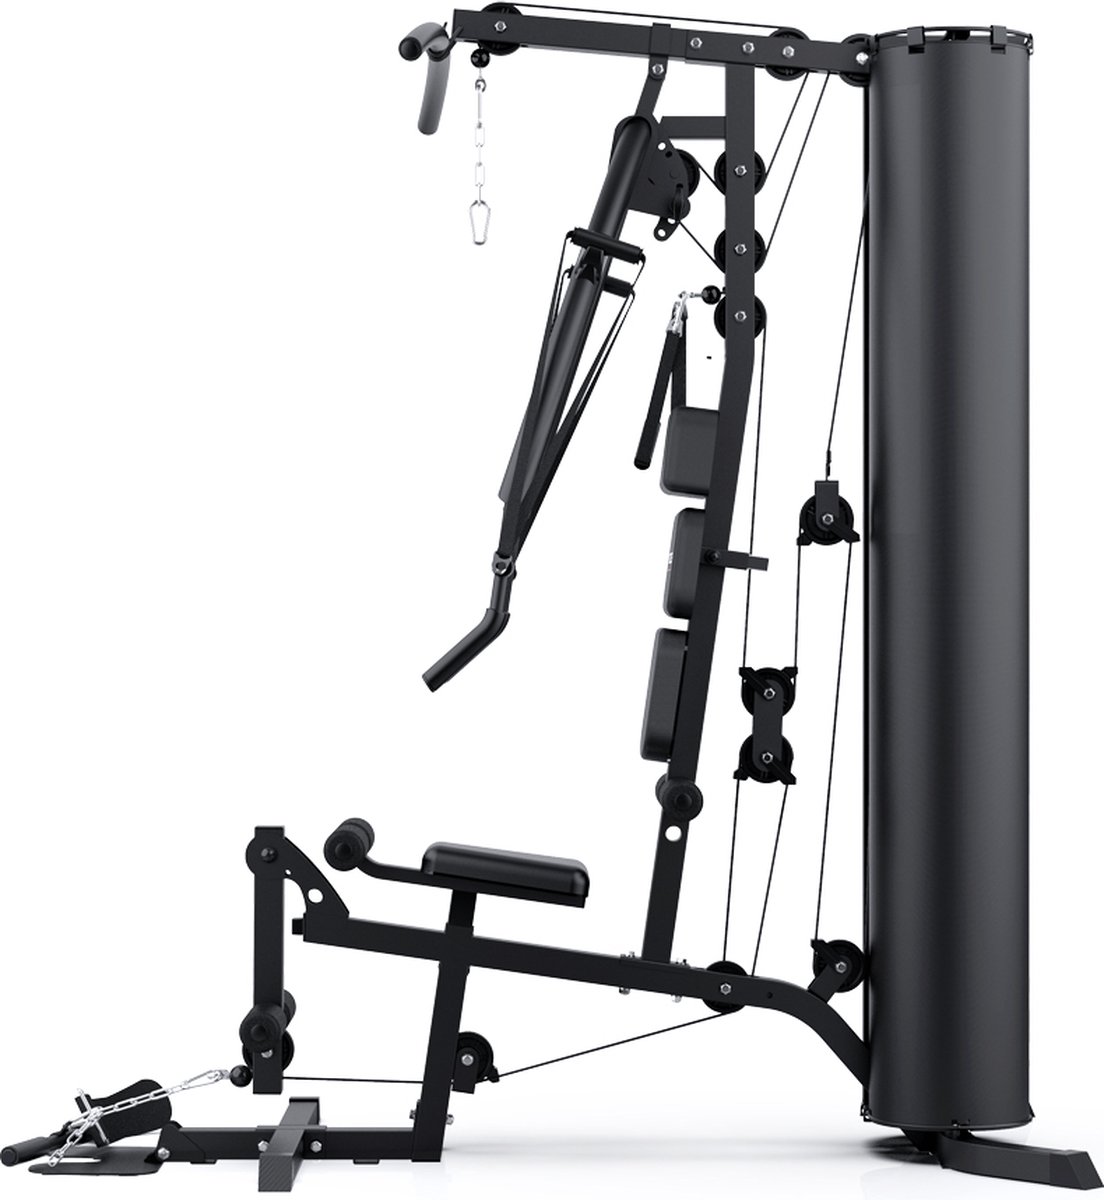 Machine multistation - musculation acier - ION Home Gym noir